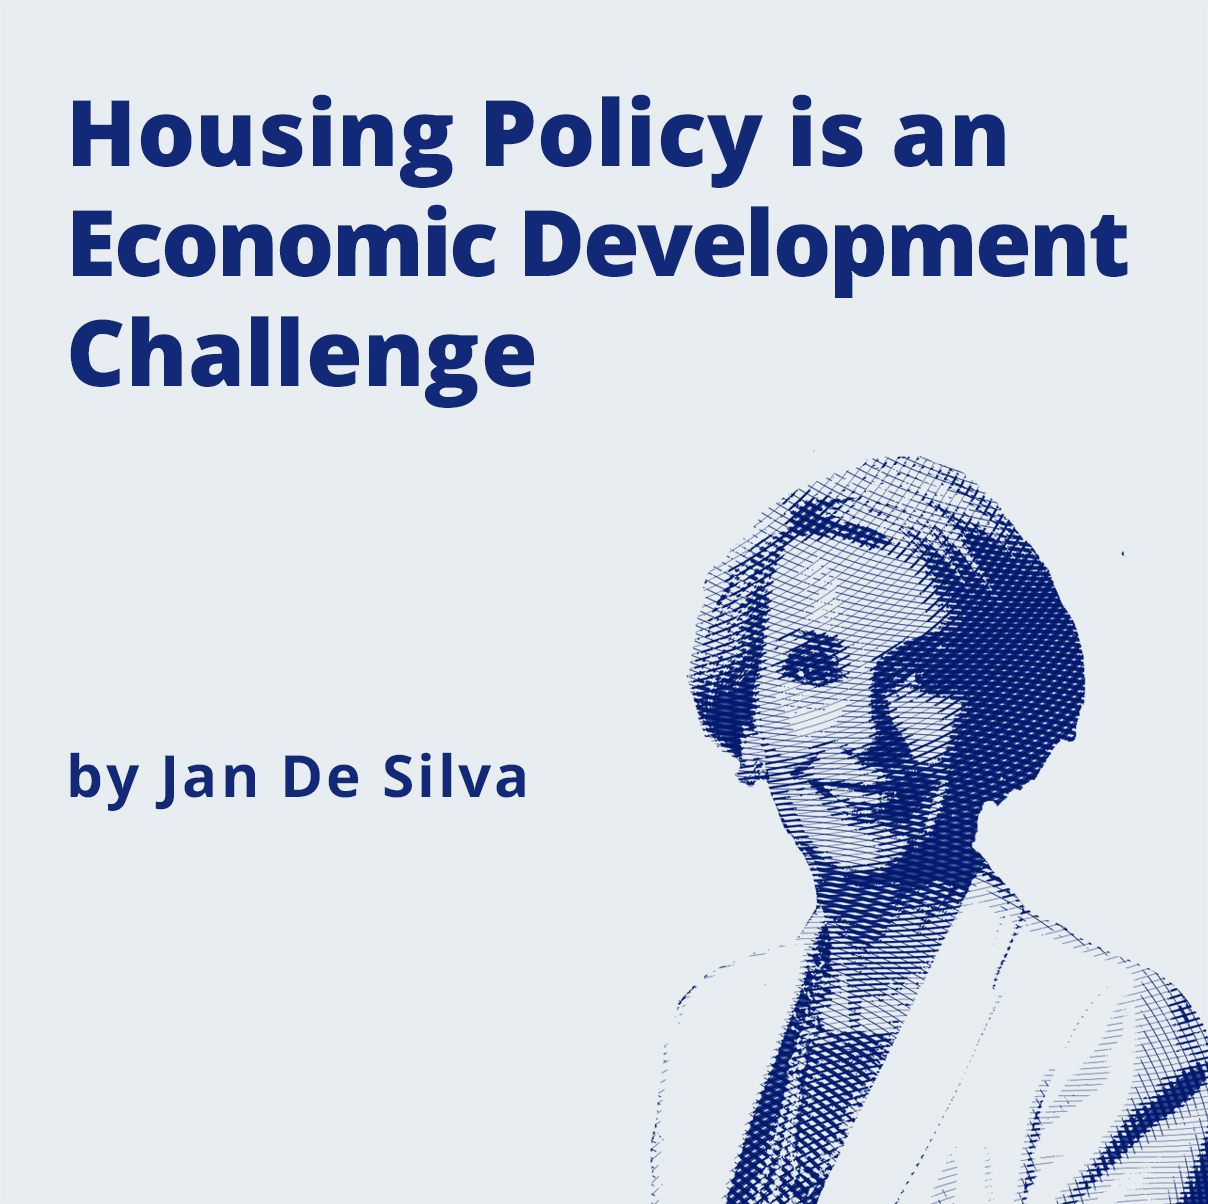 Housing Policy is an Economic Development Challenge by Jan De Silva